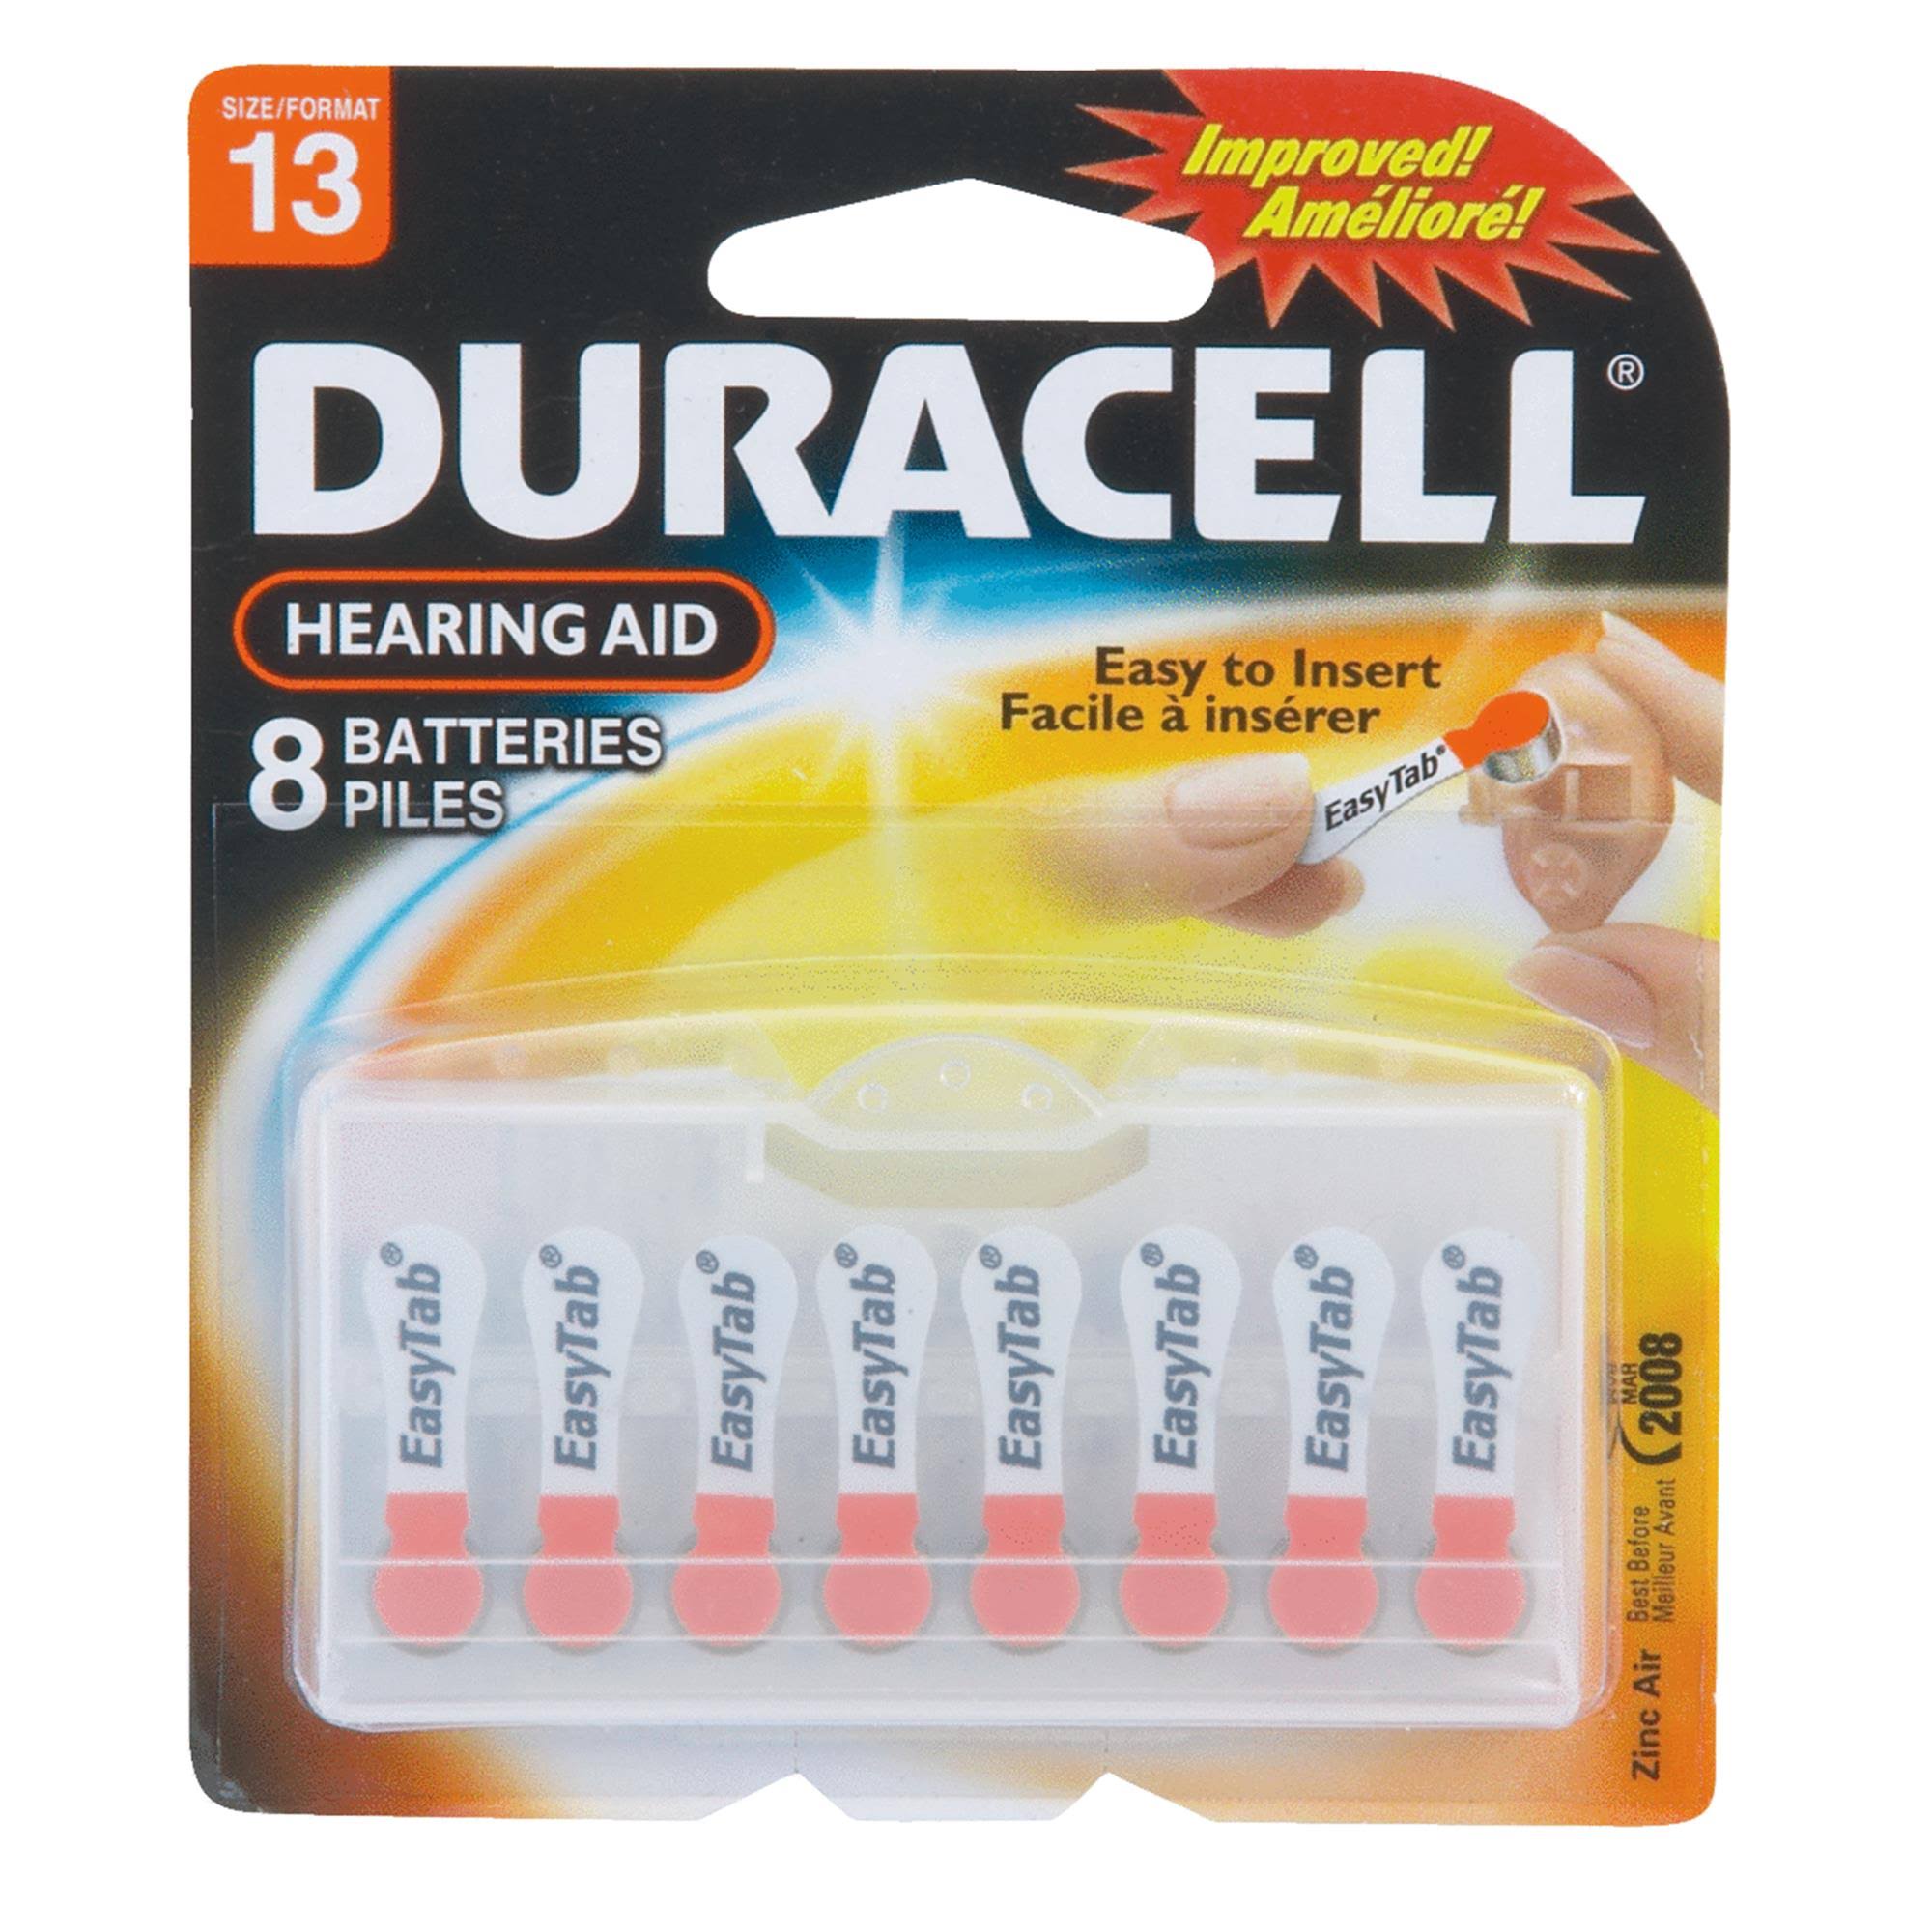 Duracell Hearing Aid Batteries - 8 Batteries